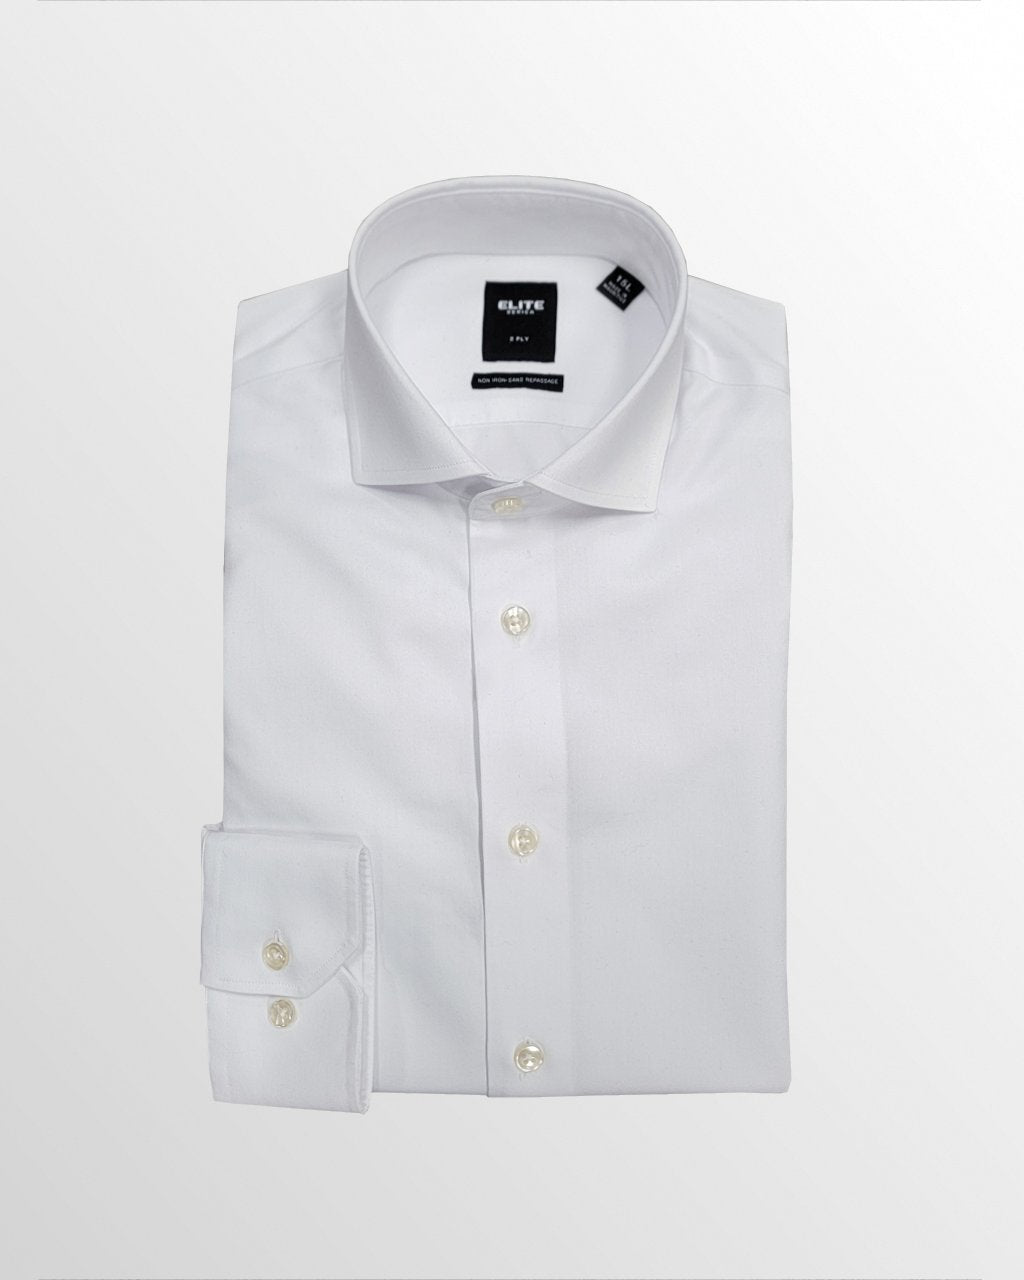 Serica Elite Twill Dress Shirt – White